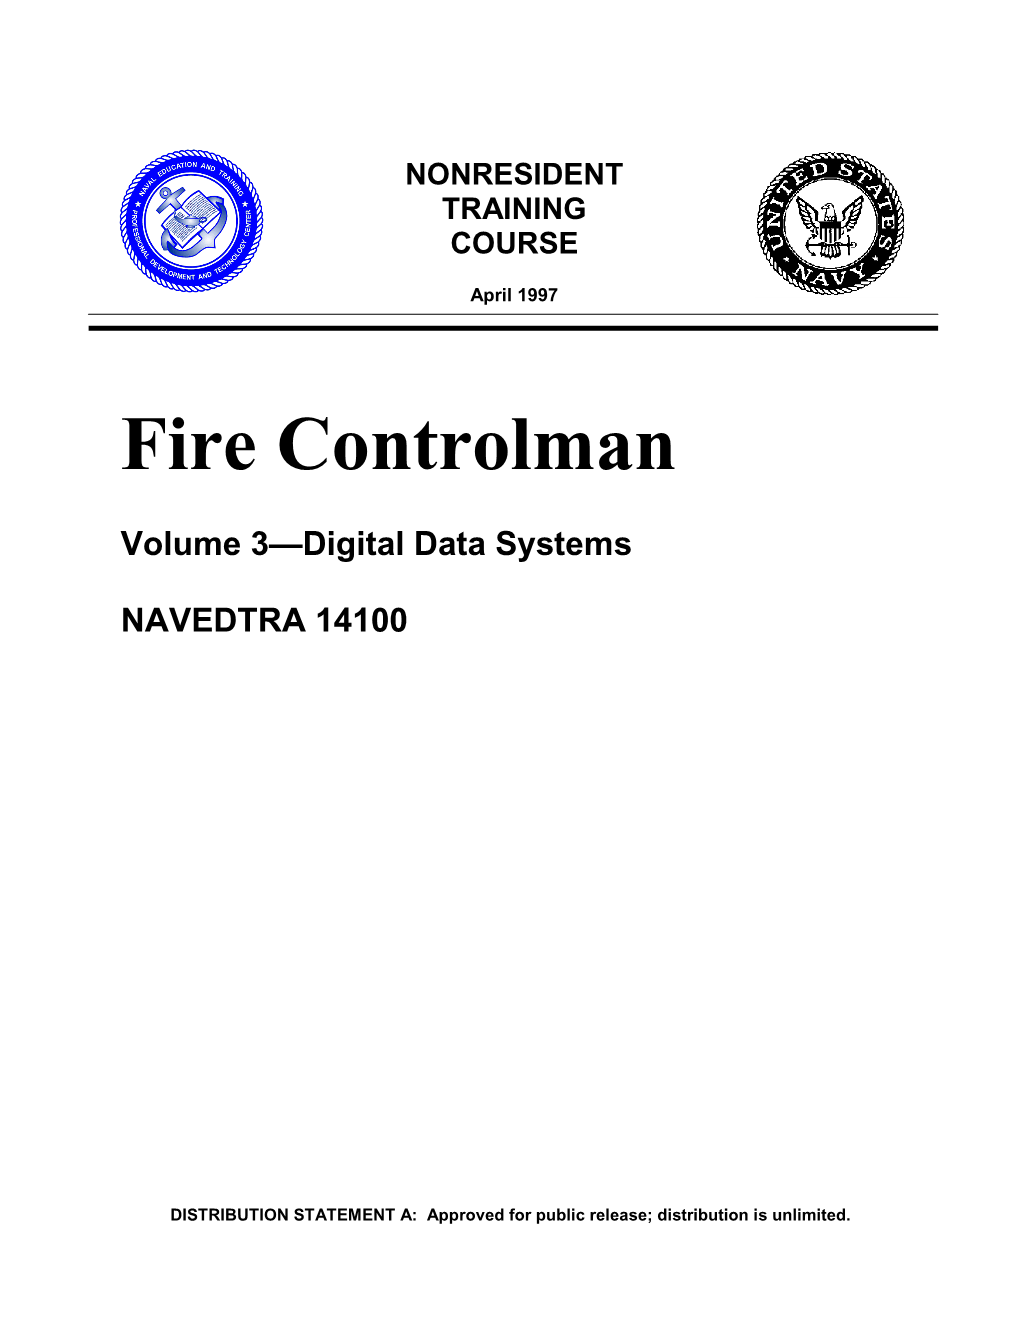 Fire Controlman